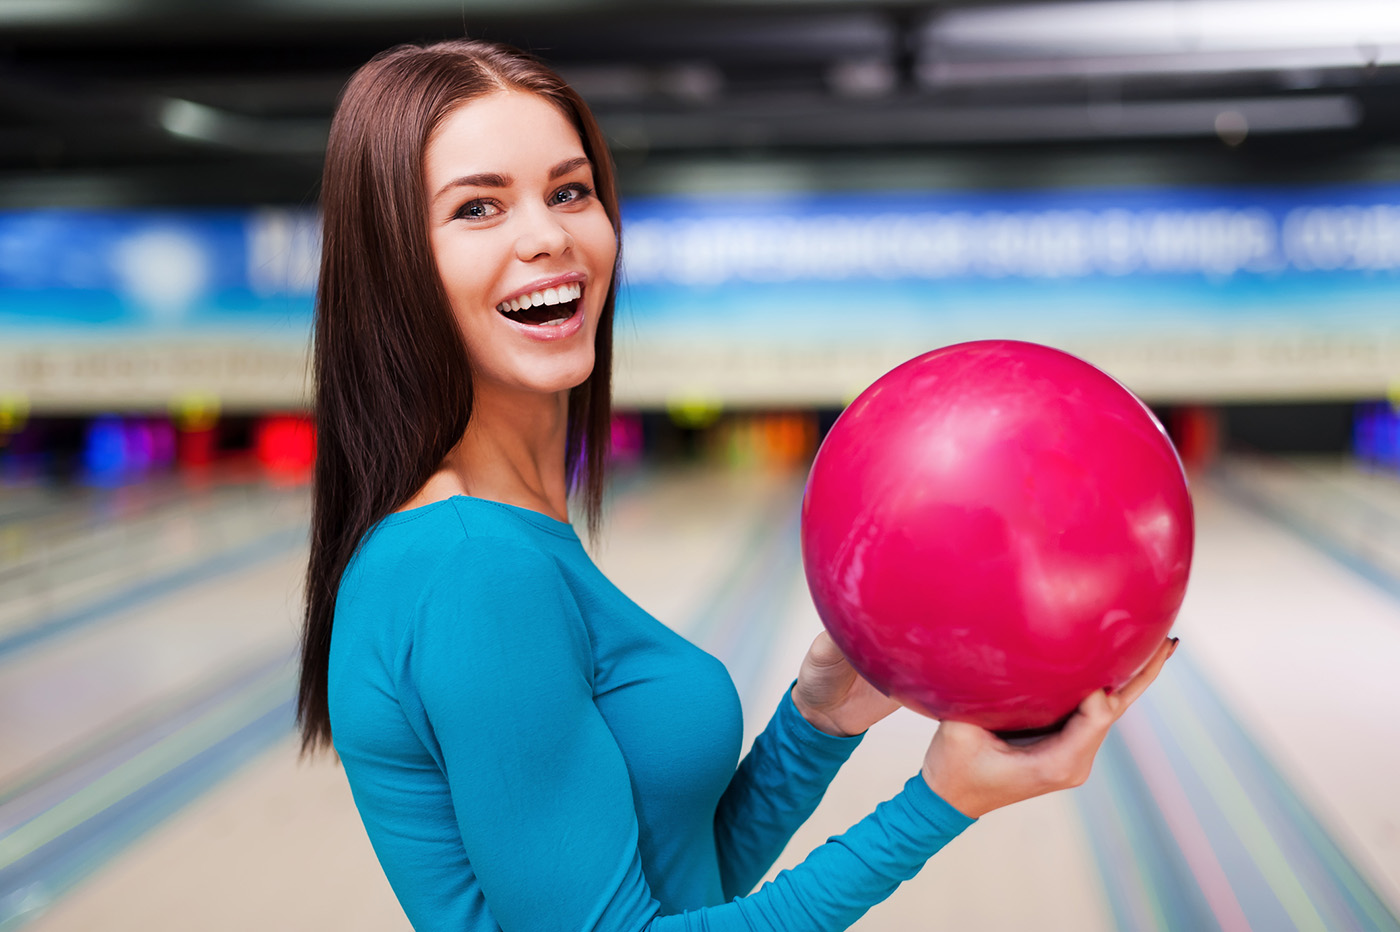 pretty girl bowling